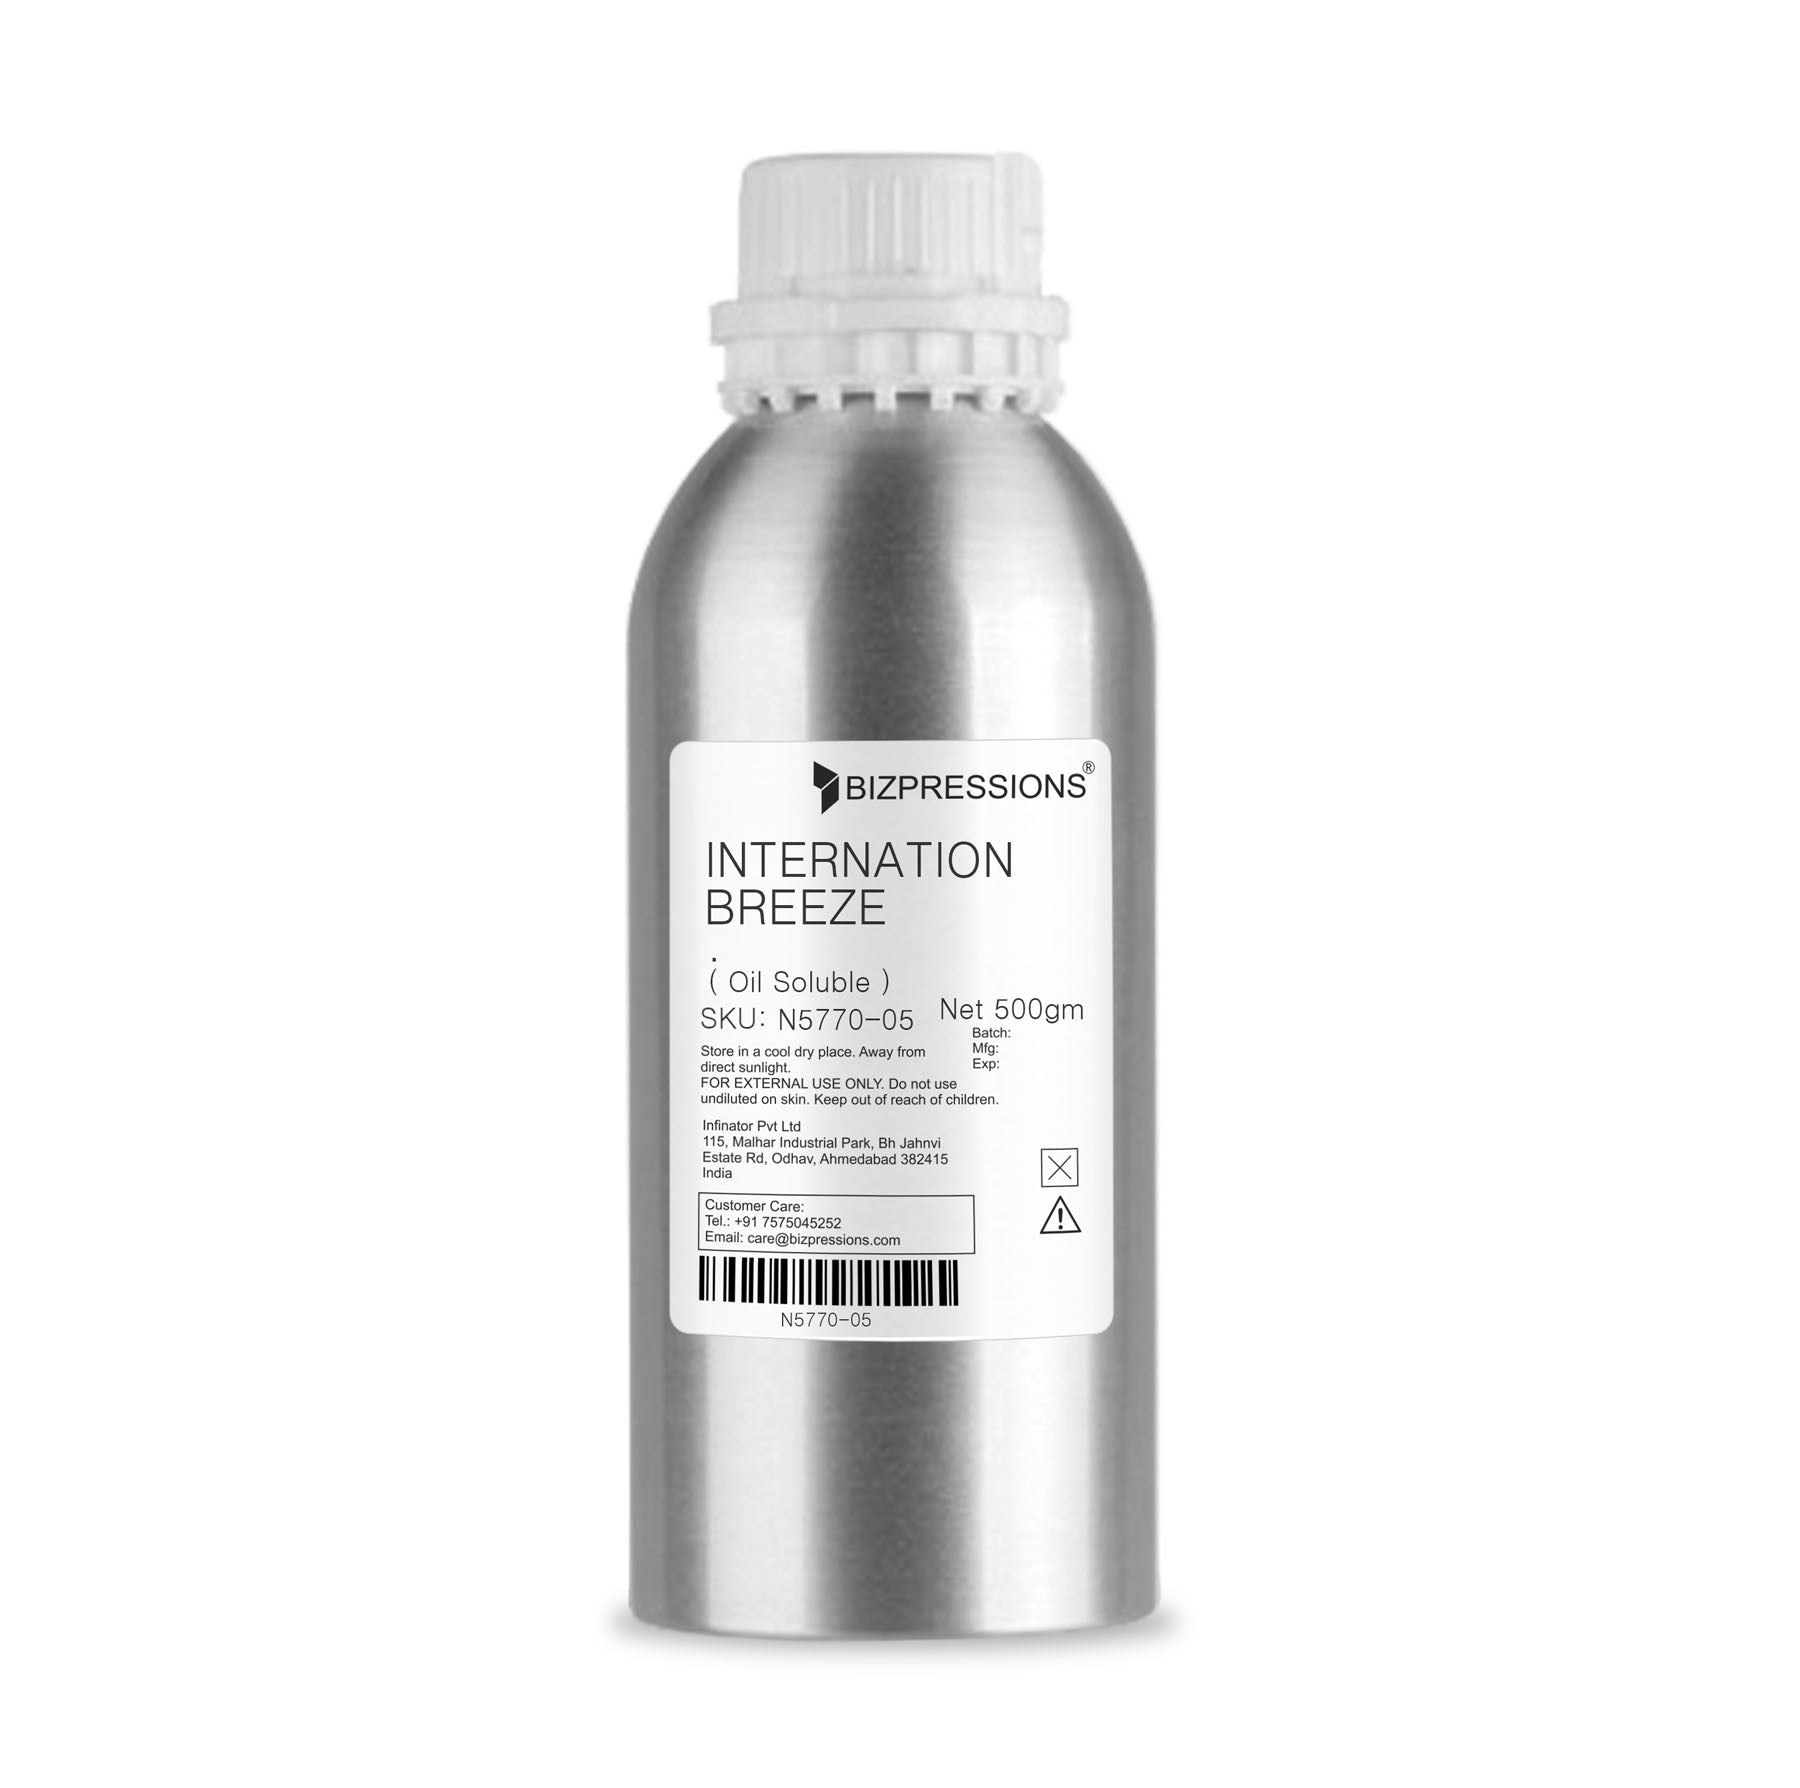 INTERNATIONAL BREEZE - Fragrance ( Oil Soluble ) - 500 gm